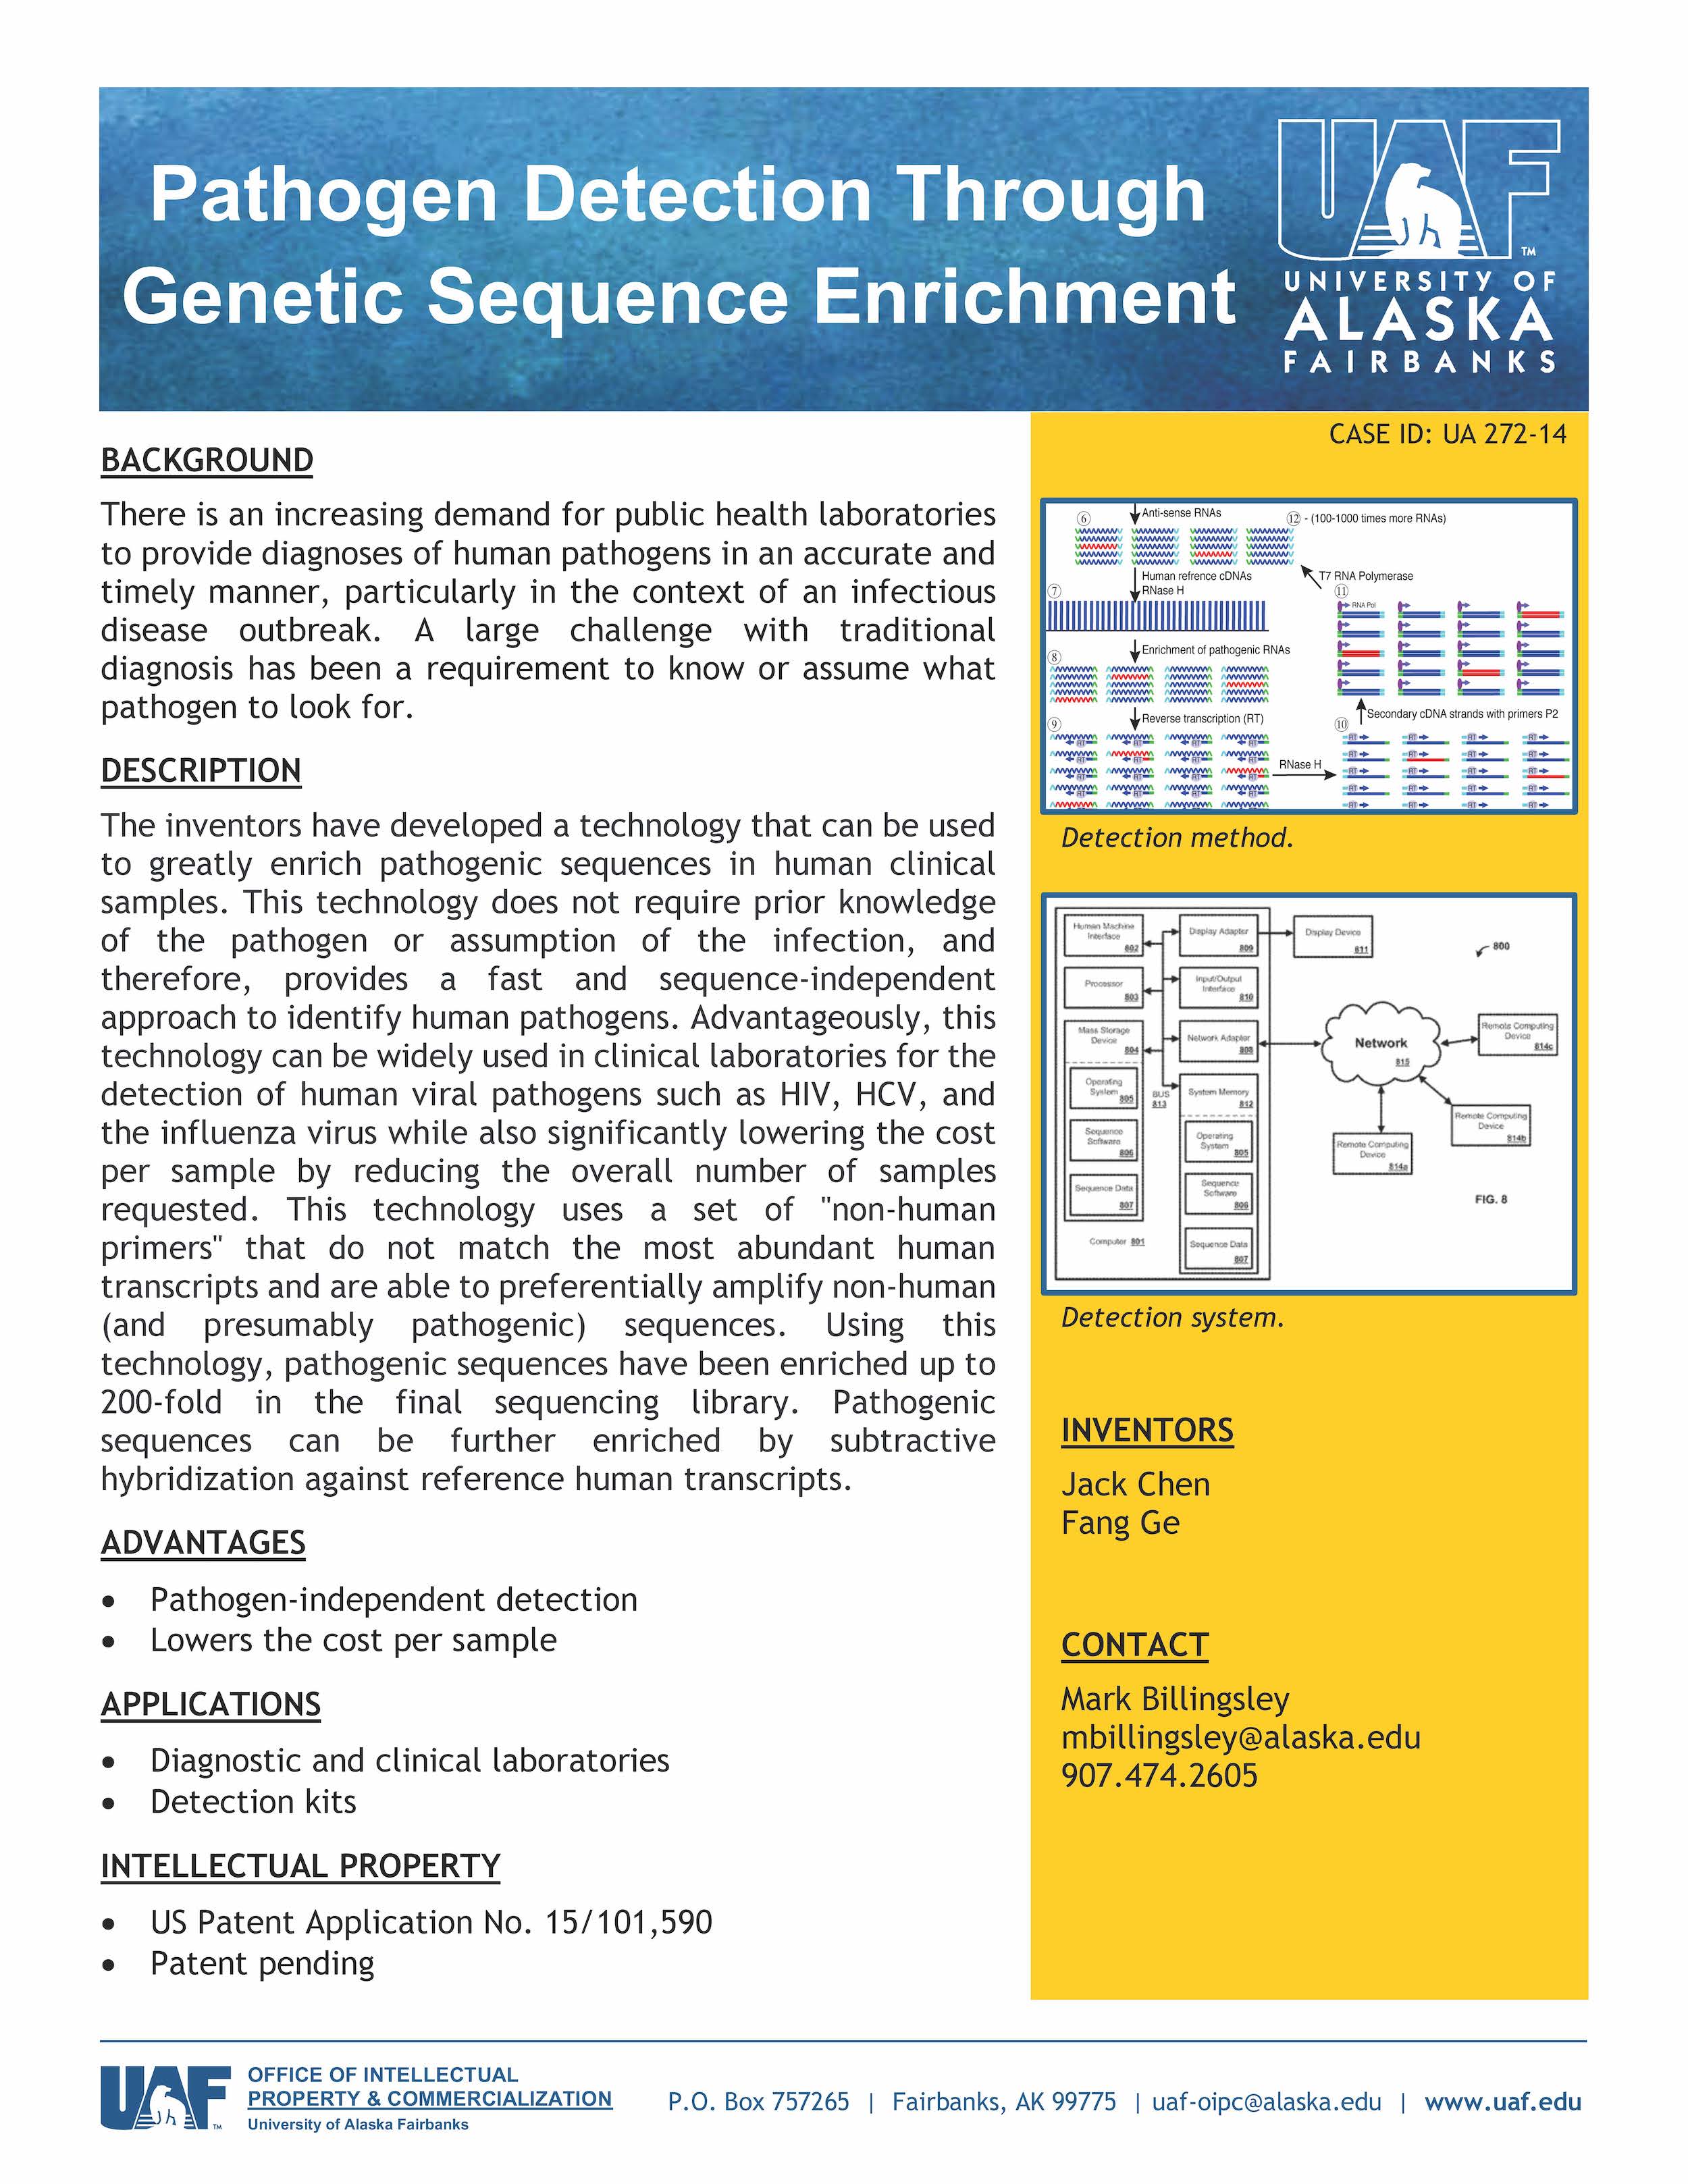 UAF Technology - Pathogen Detection Through Genetic Sequence Enrichment